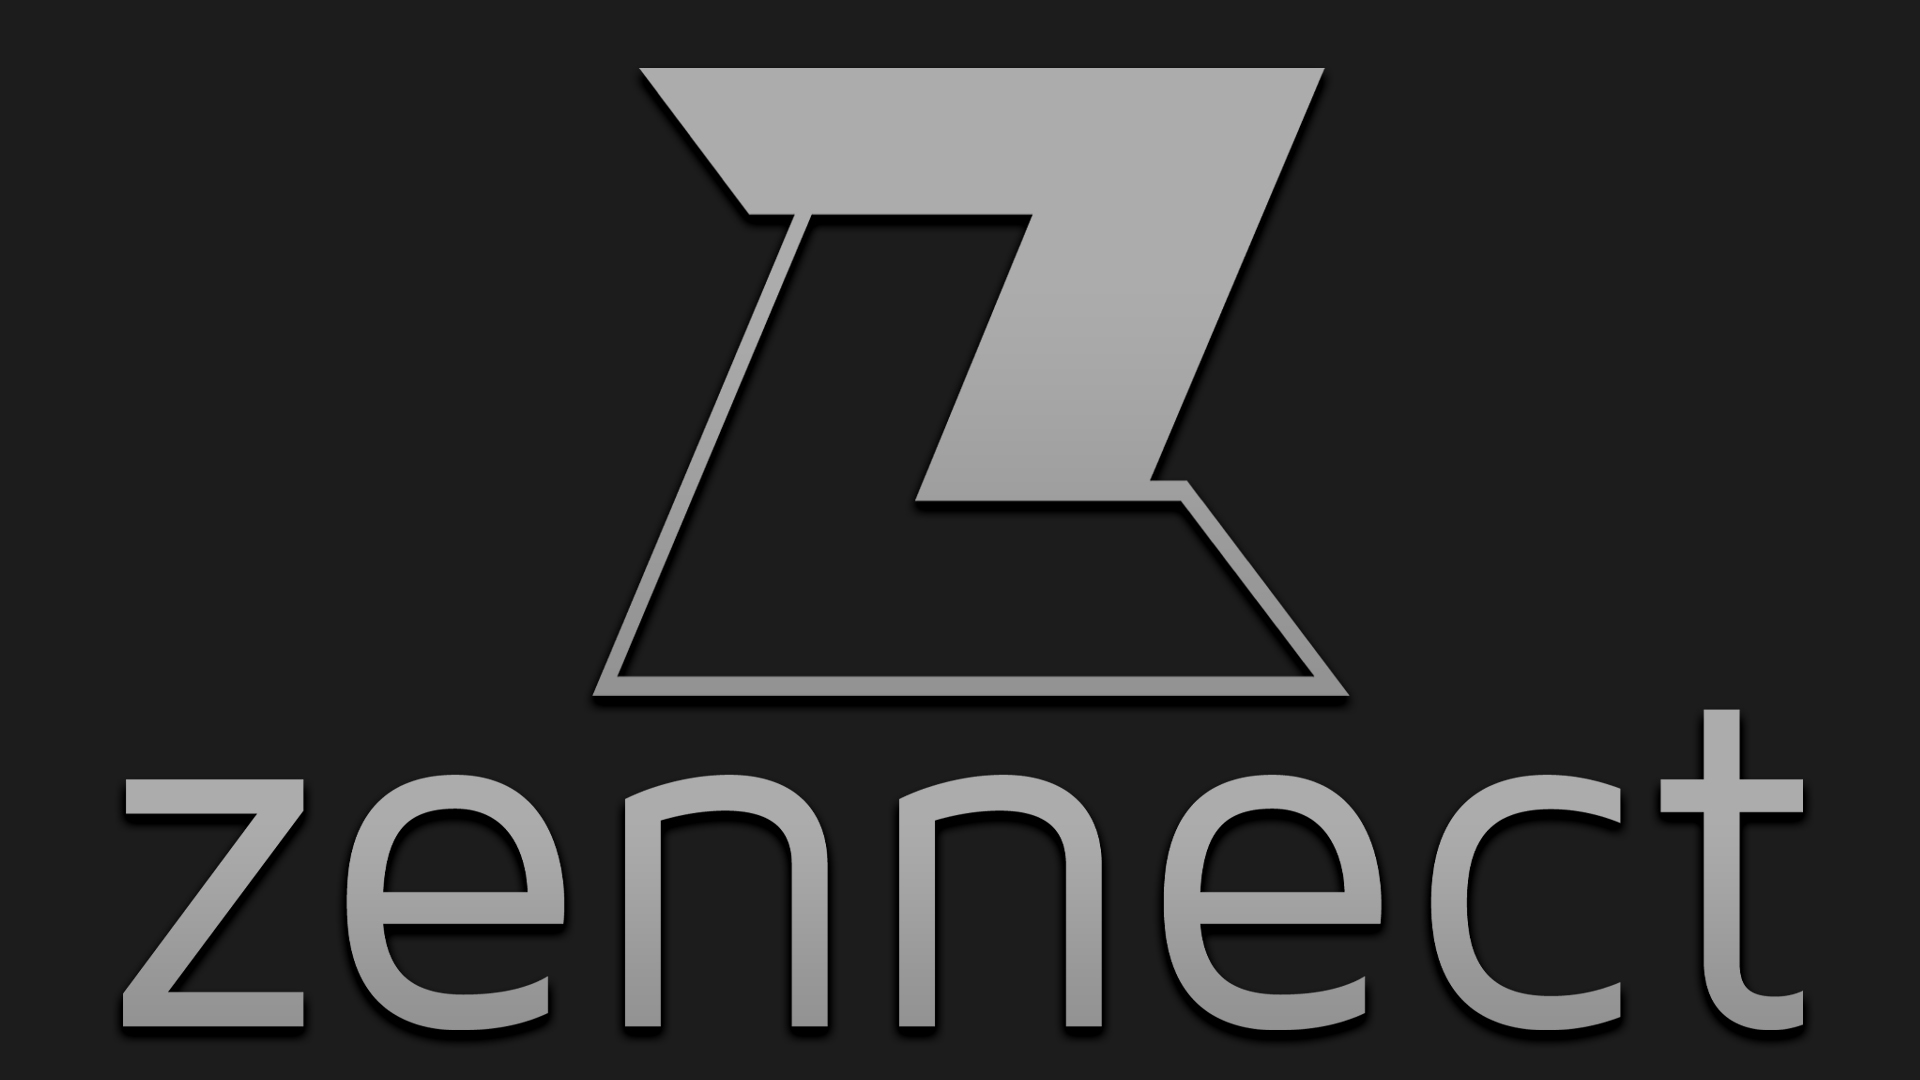 Zennect